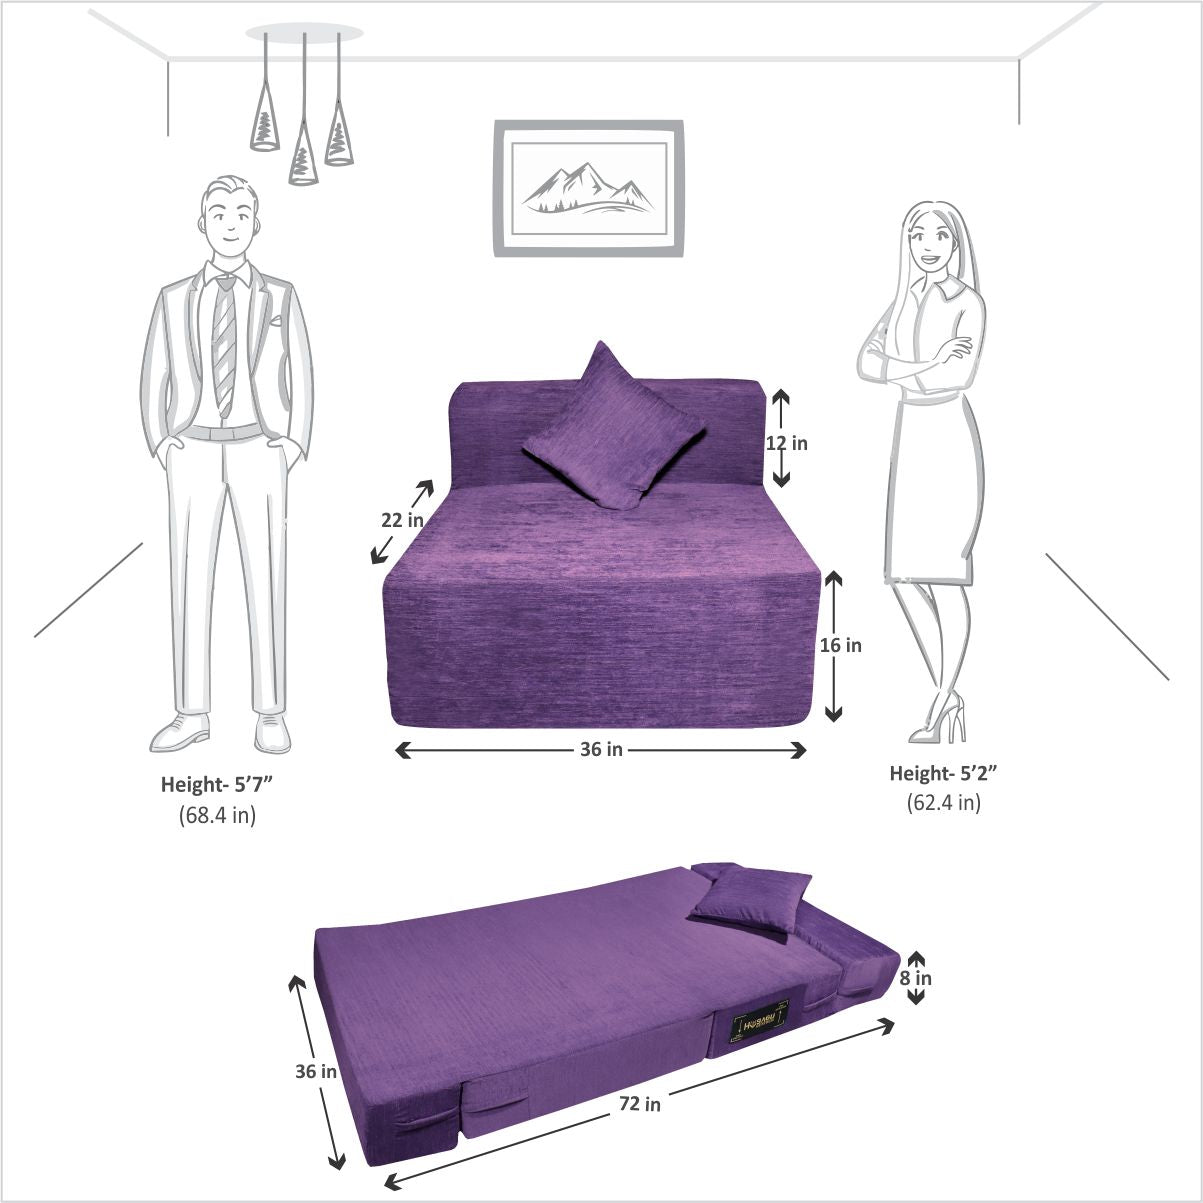 Cover of Purple Molfino Fabric 6'X3' Rejoice Sofa cum Bed